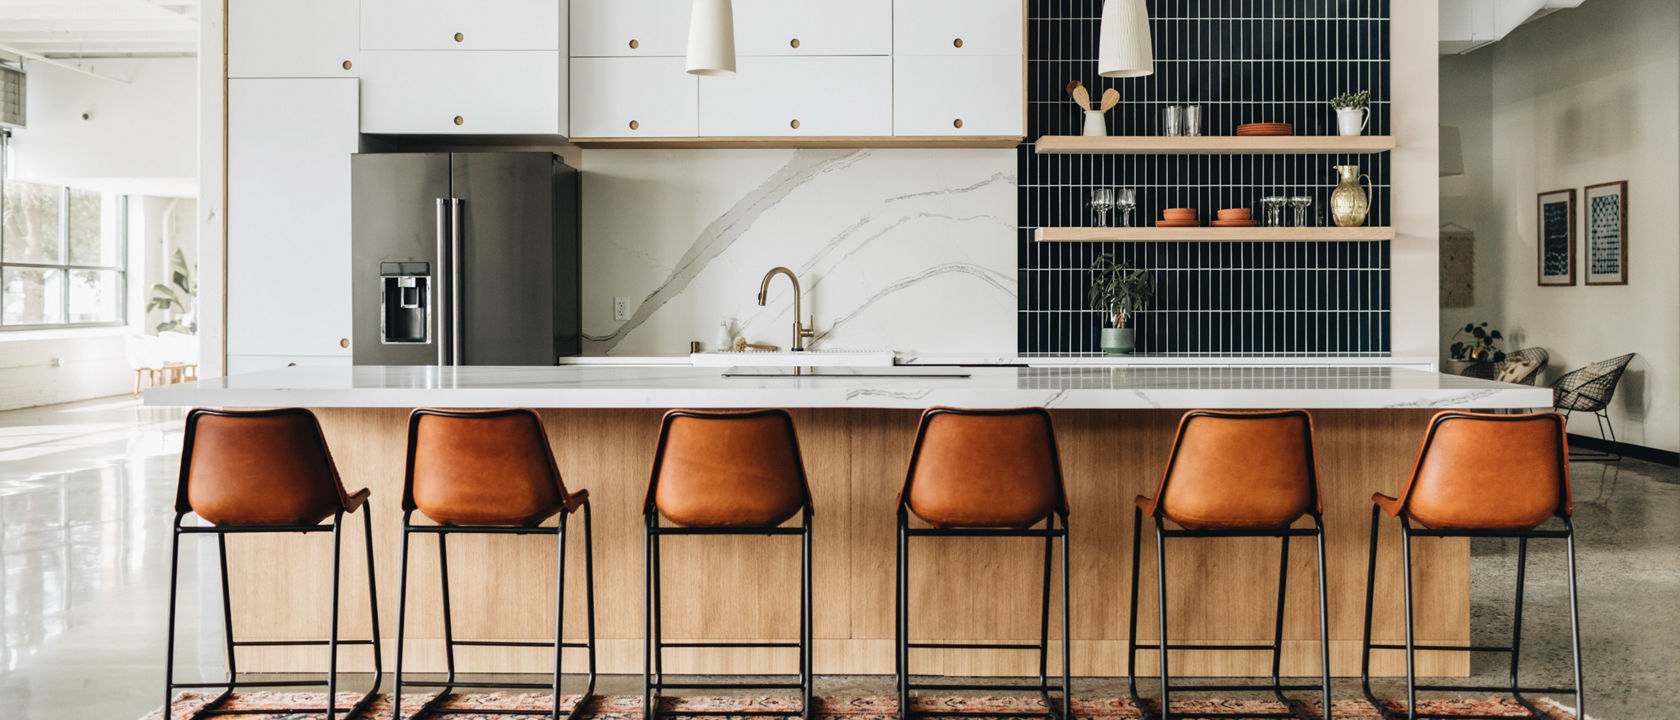 A modern kitchen with white quartz countertops and matching quartz backsplash, white cabinets, open shelving with black tile backsplash behind it, and six leather barstools